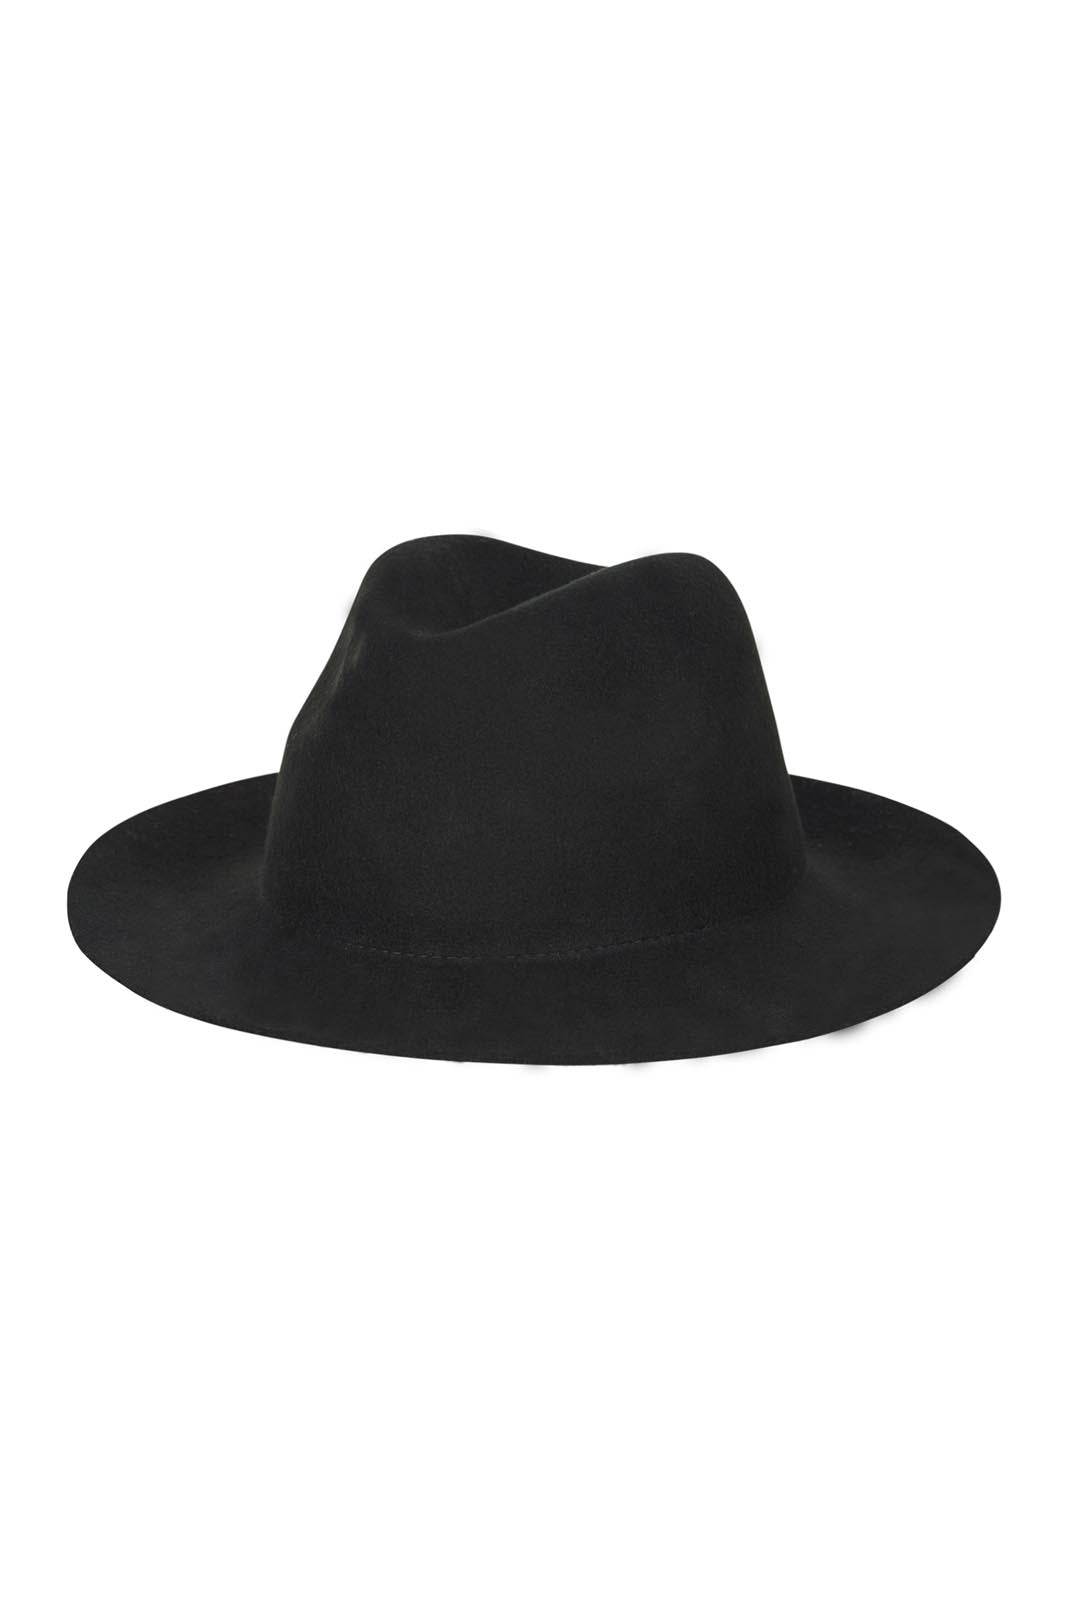 Departure Hat - Black - eb&ive Hat